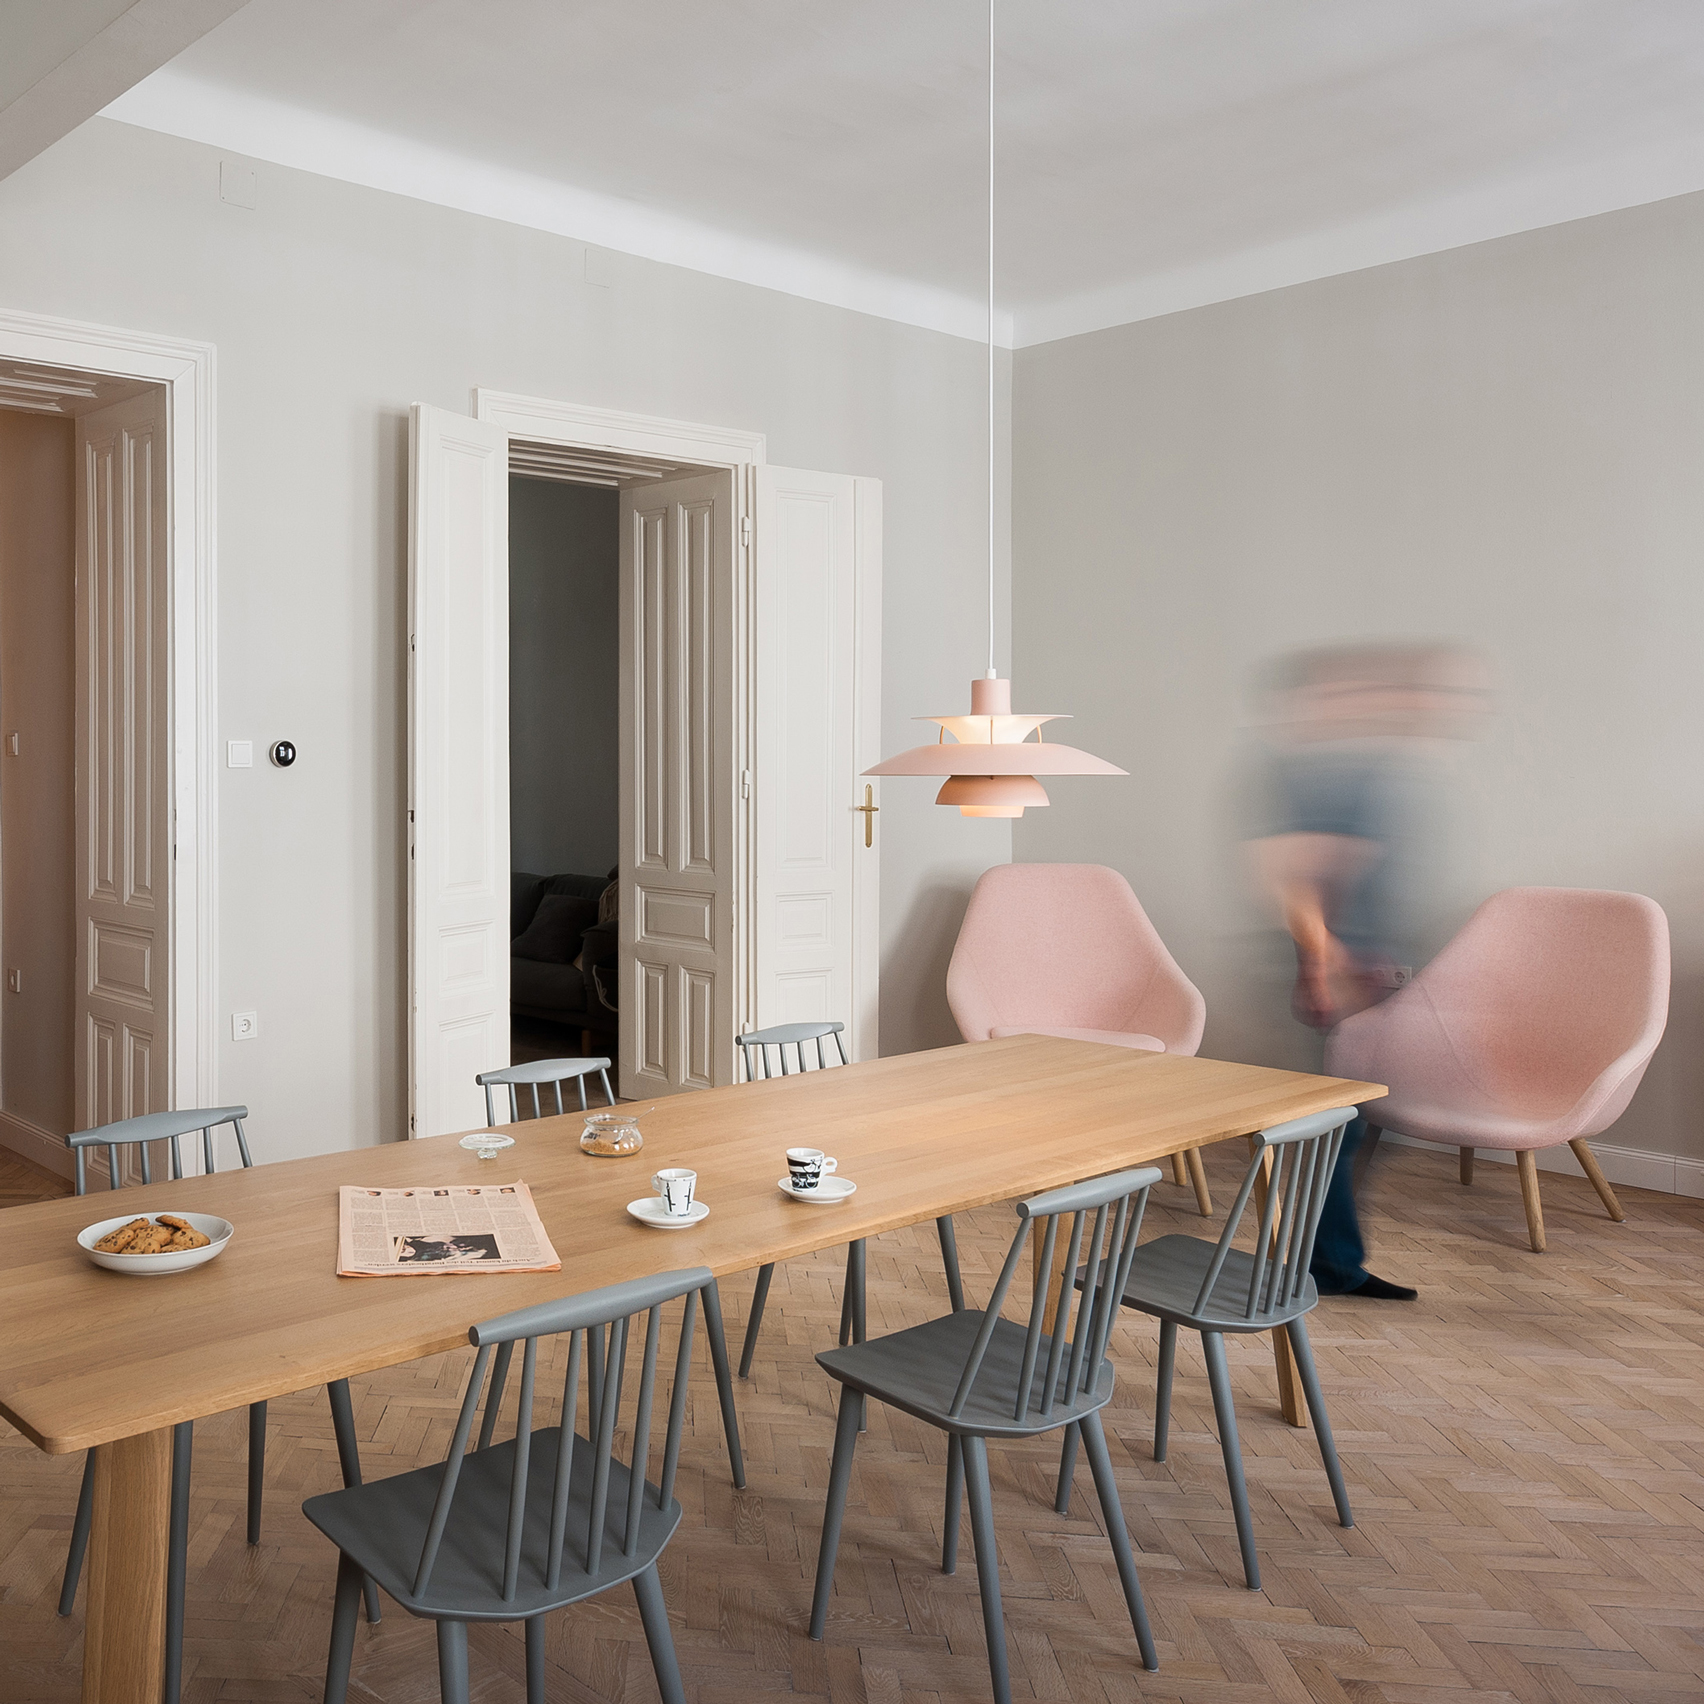 Kombinat designs kitchen-style workplace for Vienna apartment